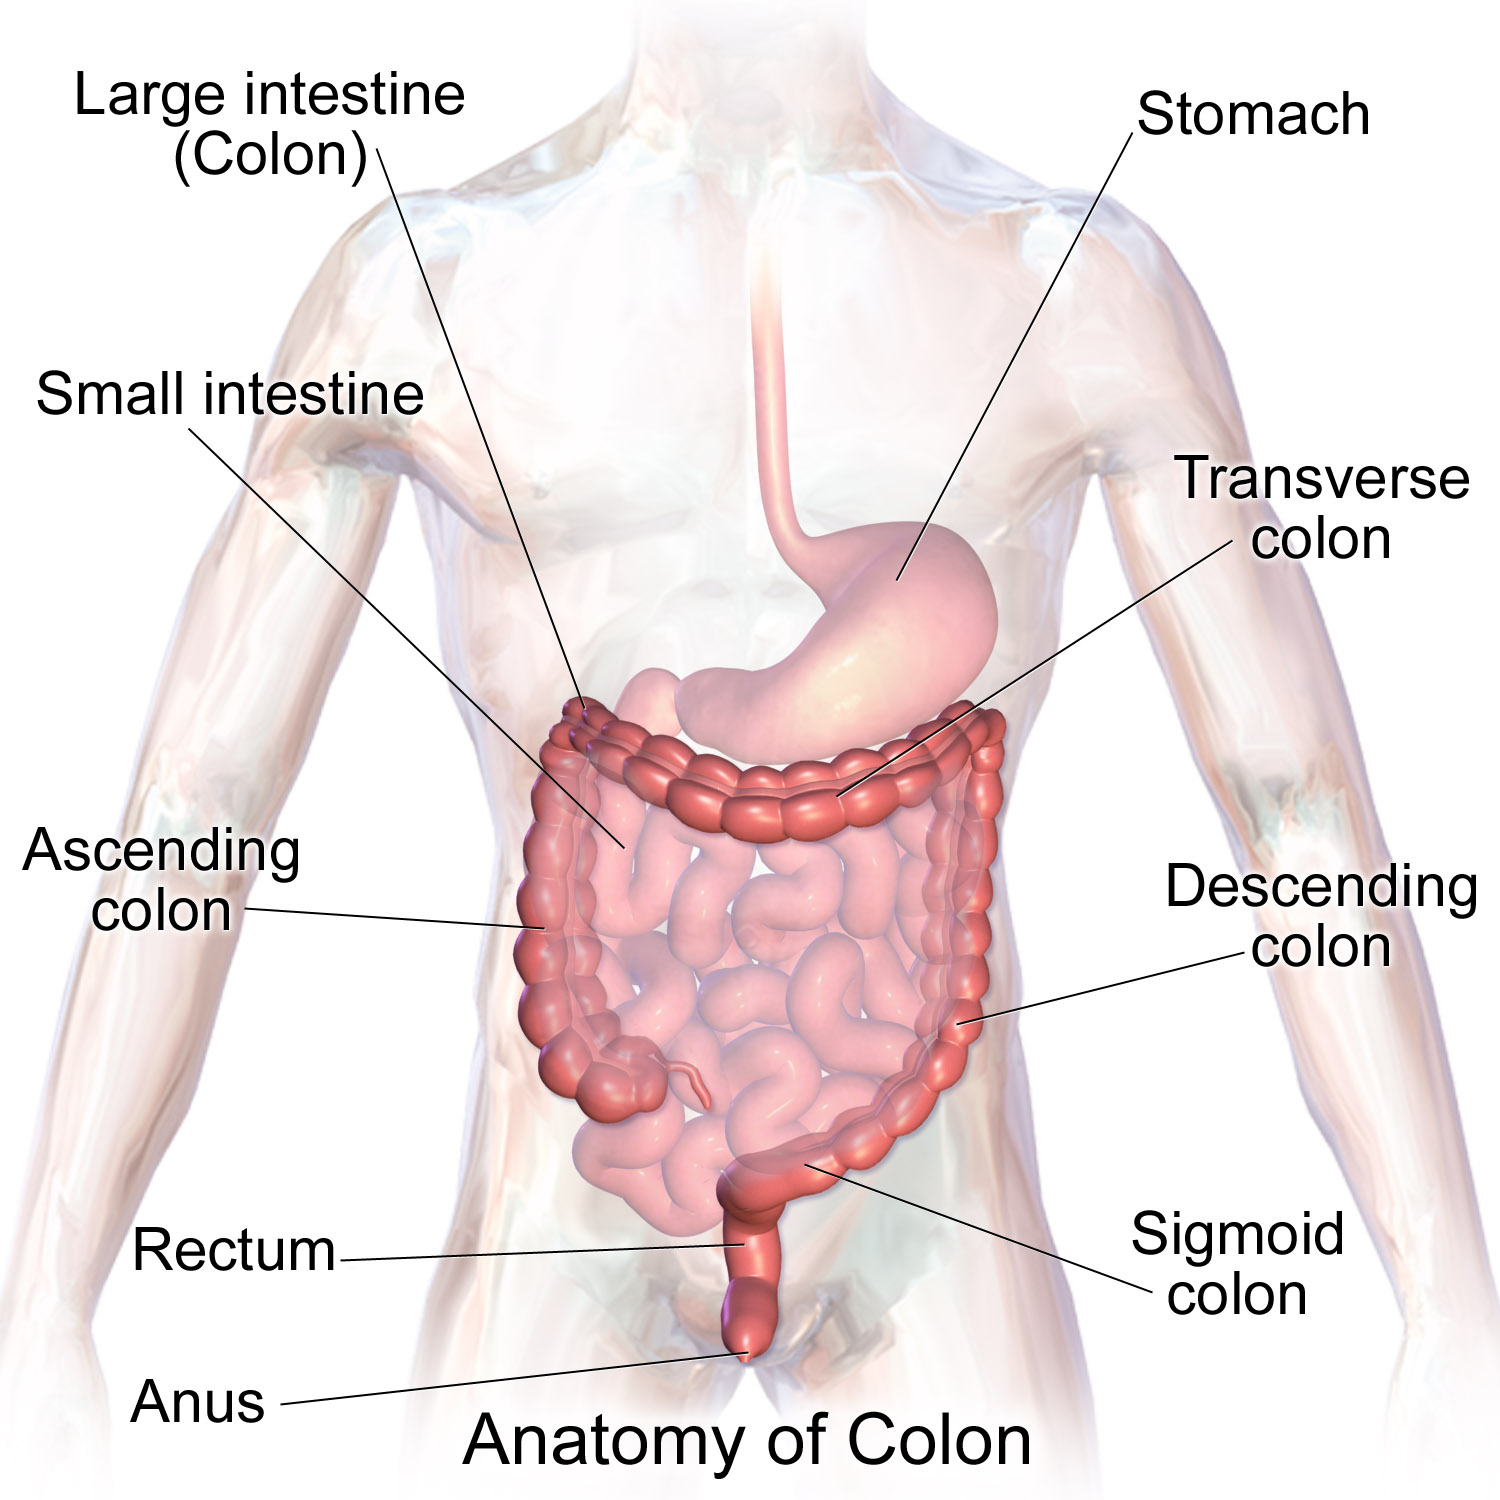 Digestive system: Large Intestine